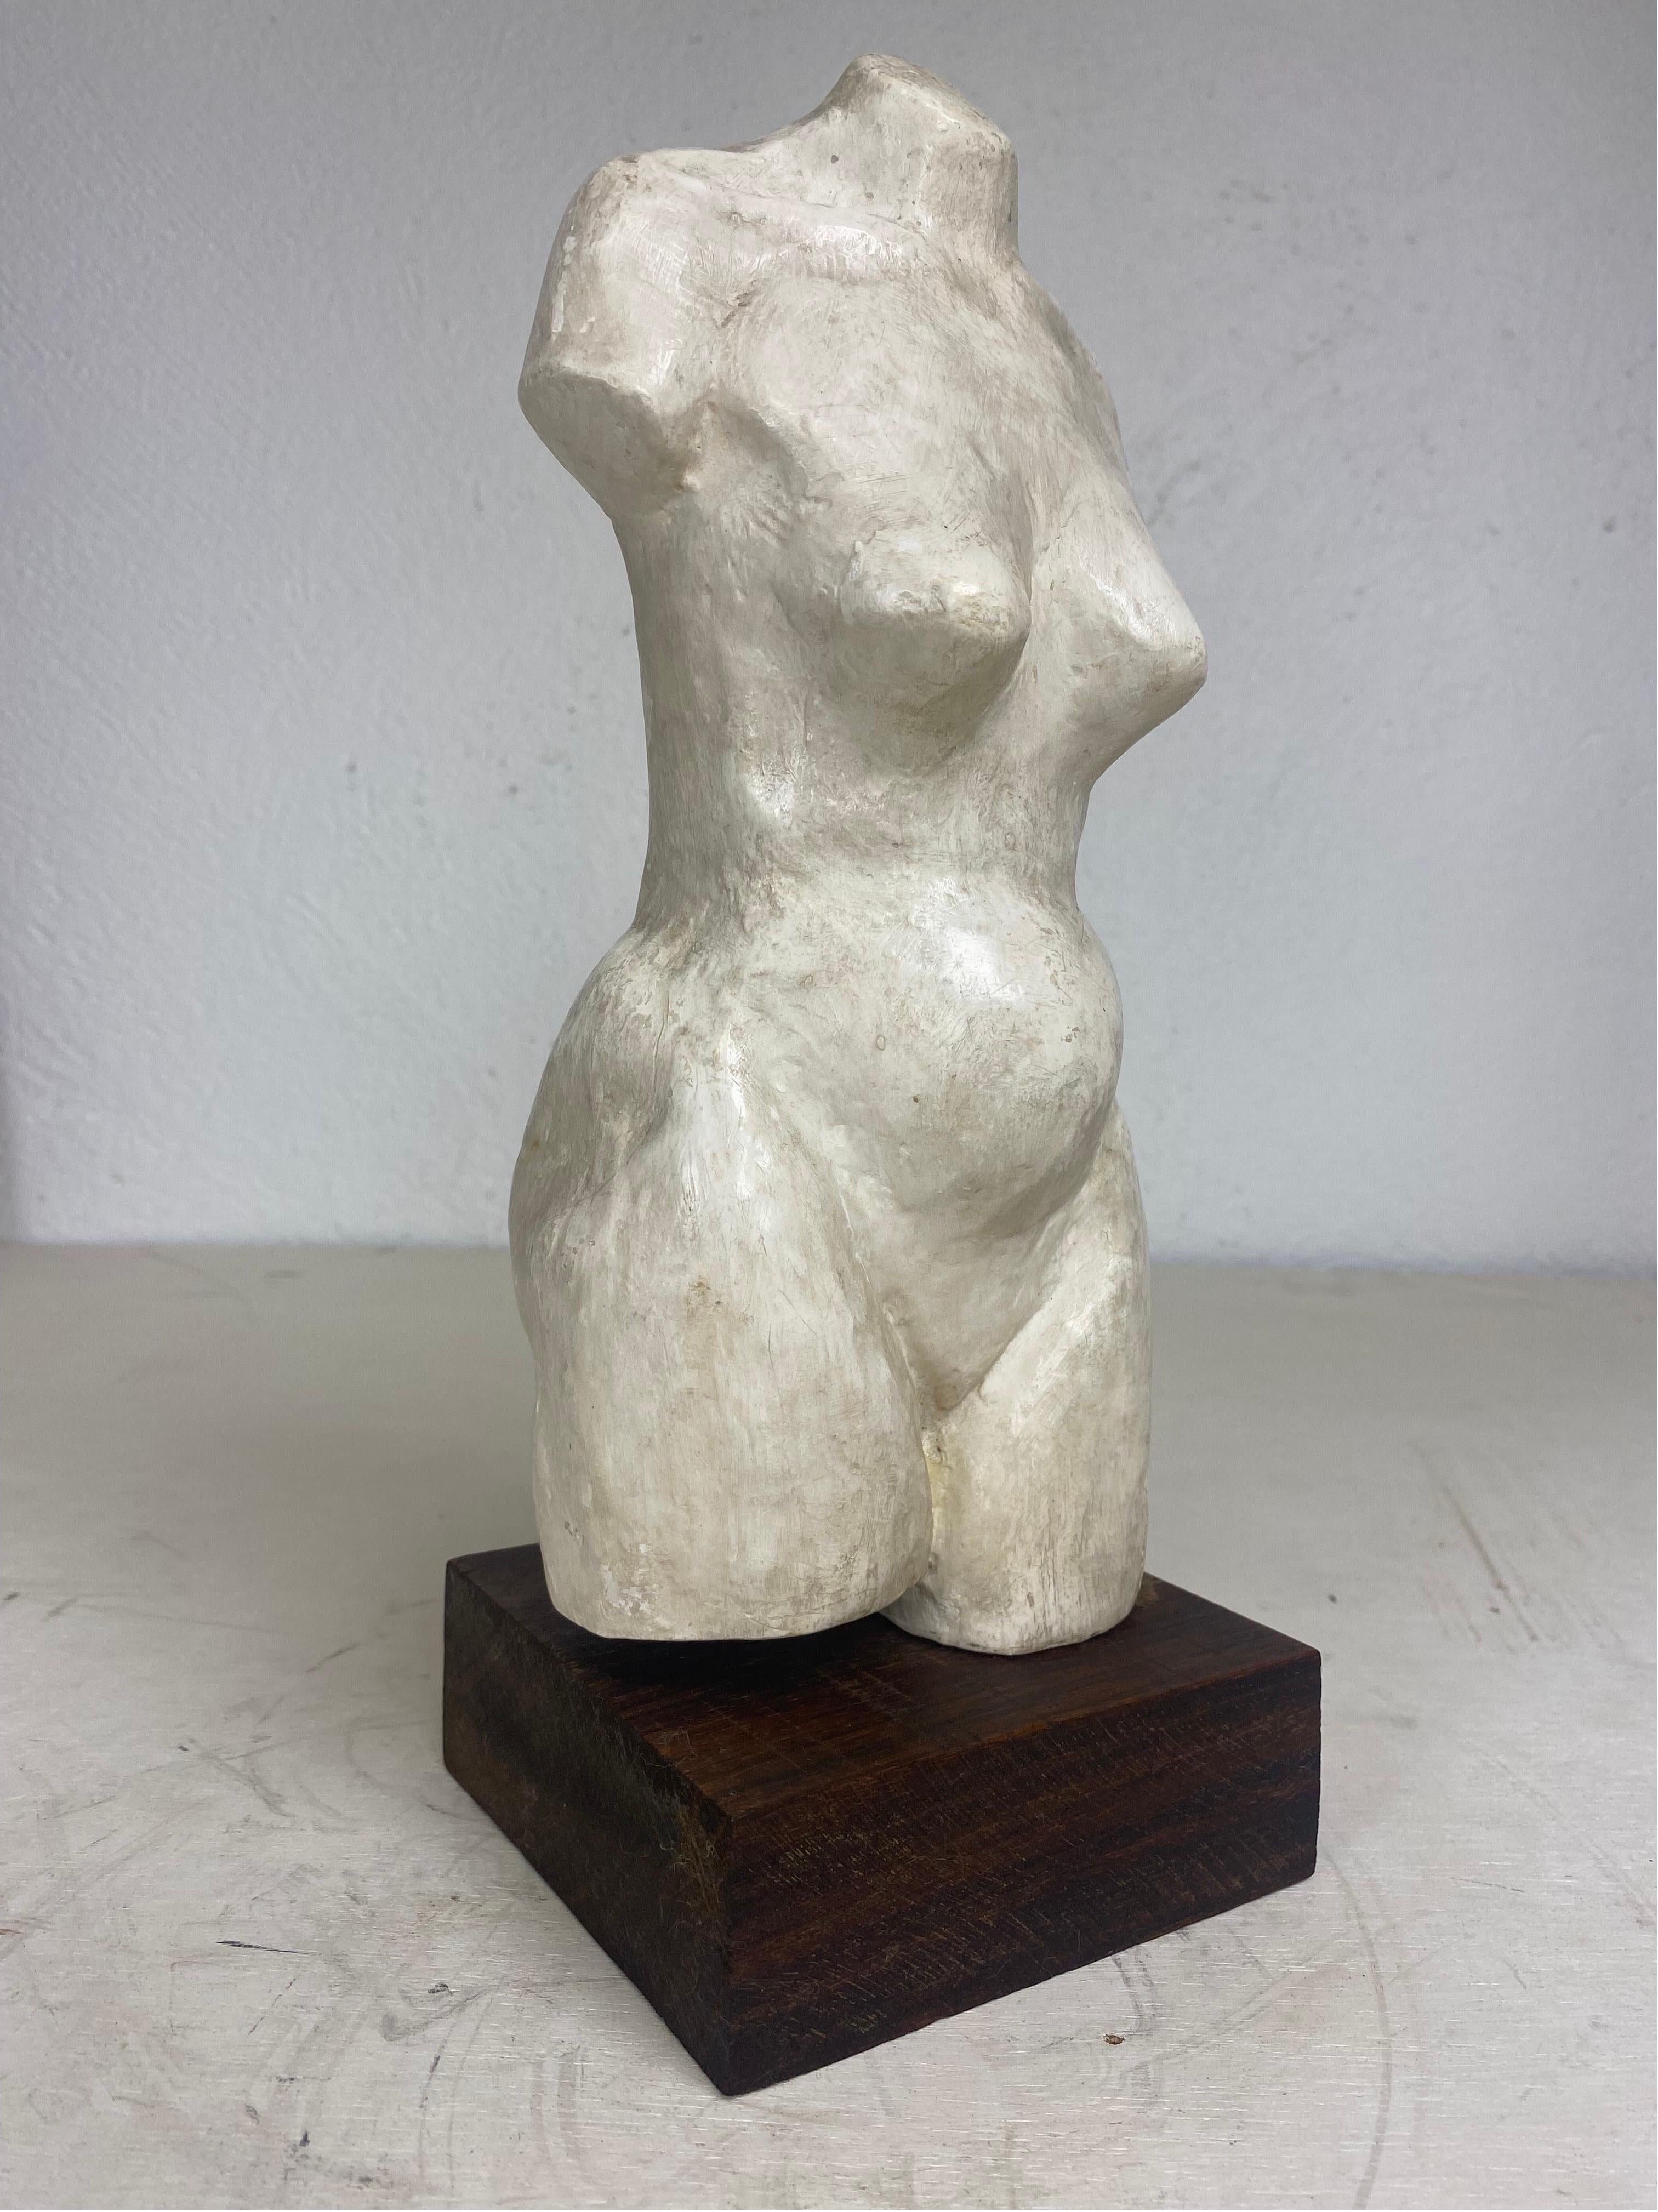 American Mid-20th century female nude study plaster sculpture